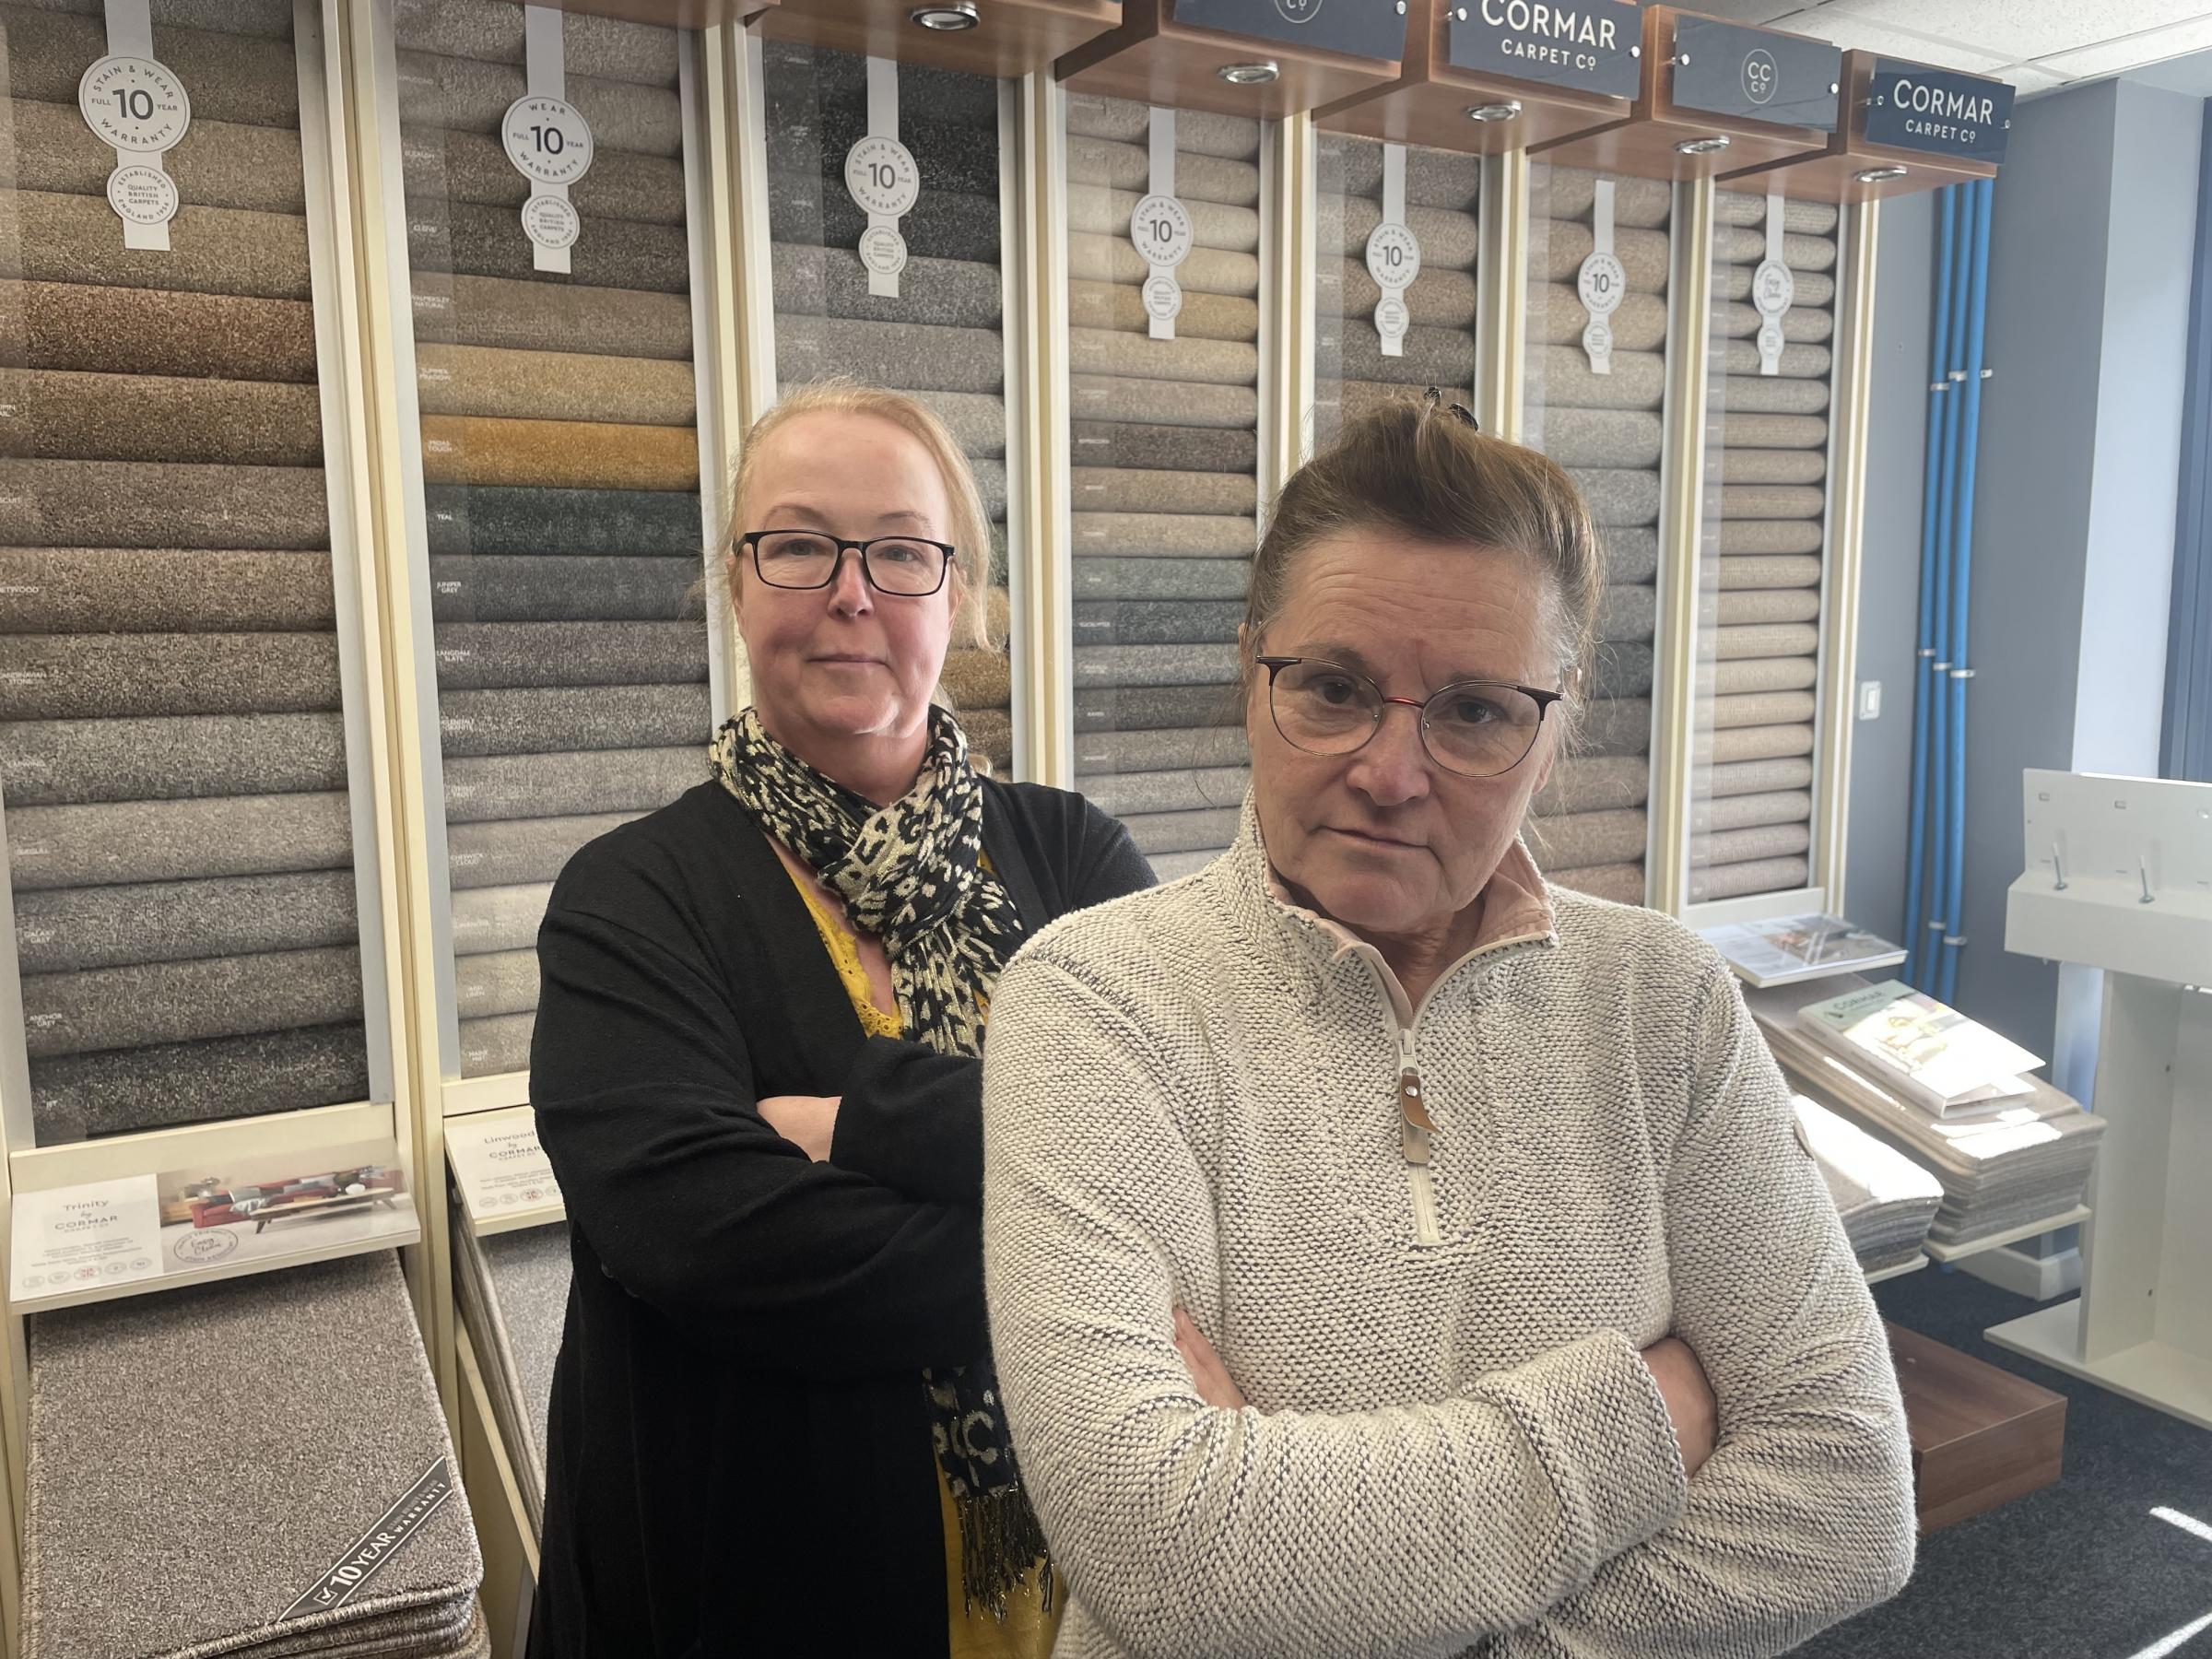 Jane Dundavan and Gwen Agg both run businesses on Blackburn Street